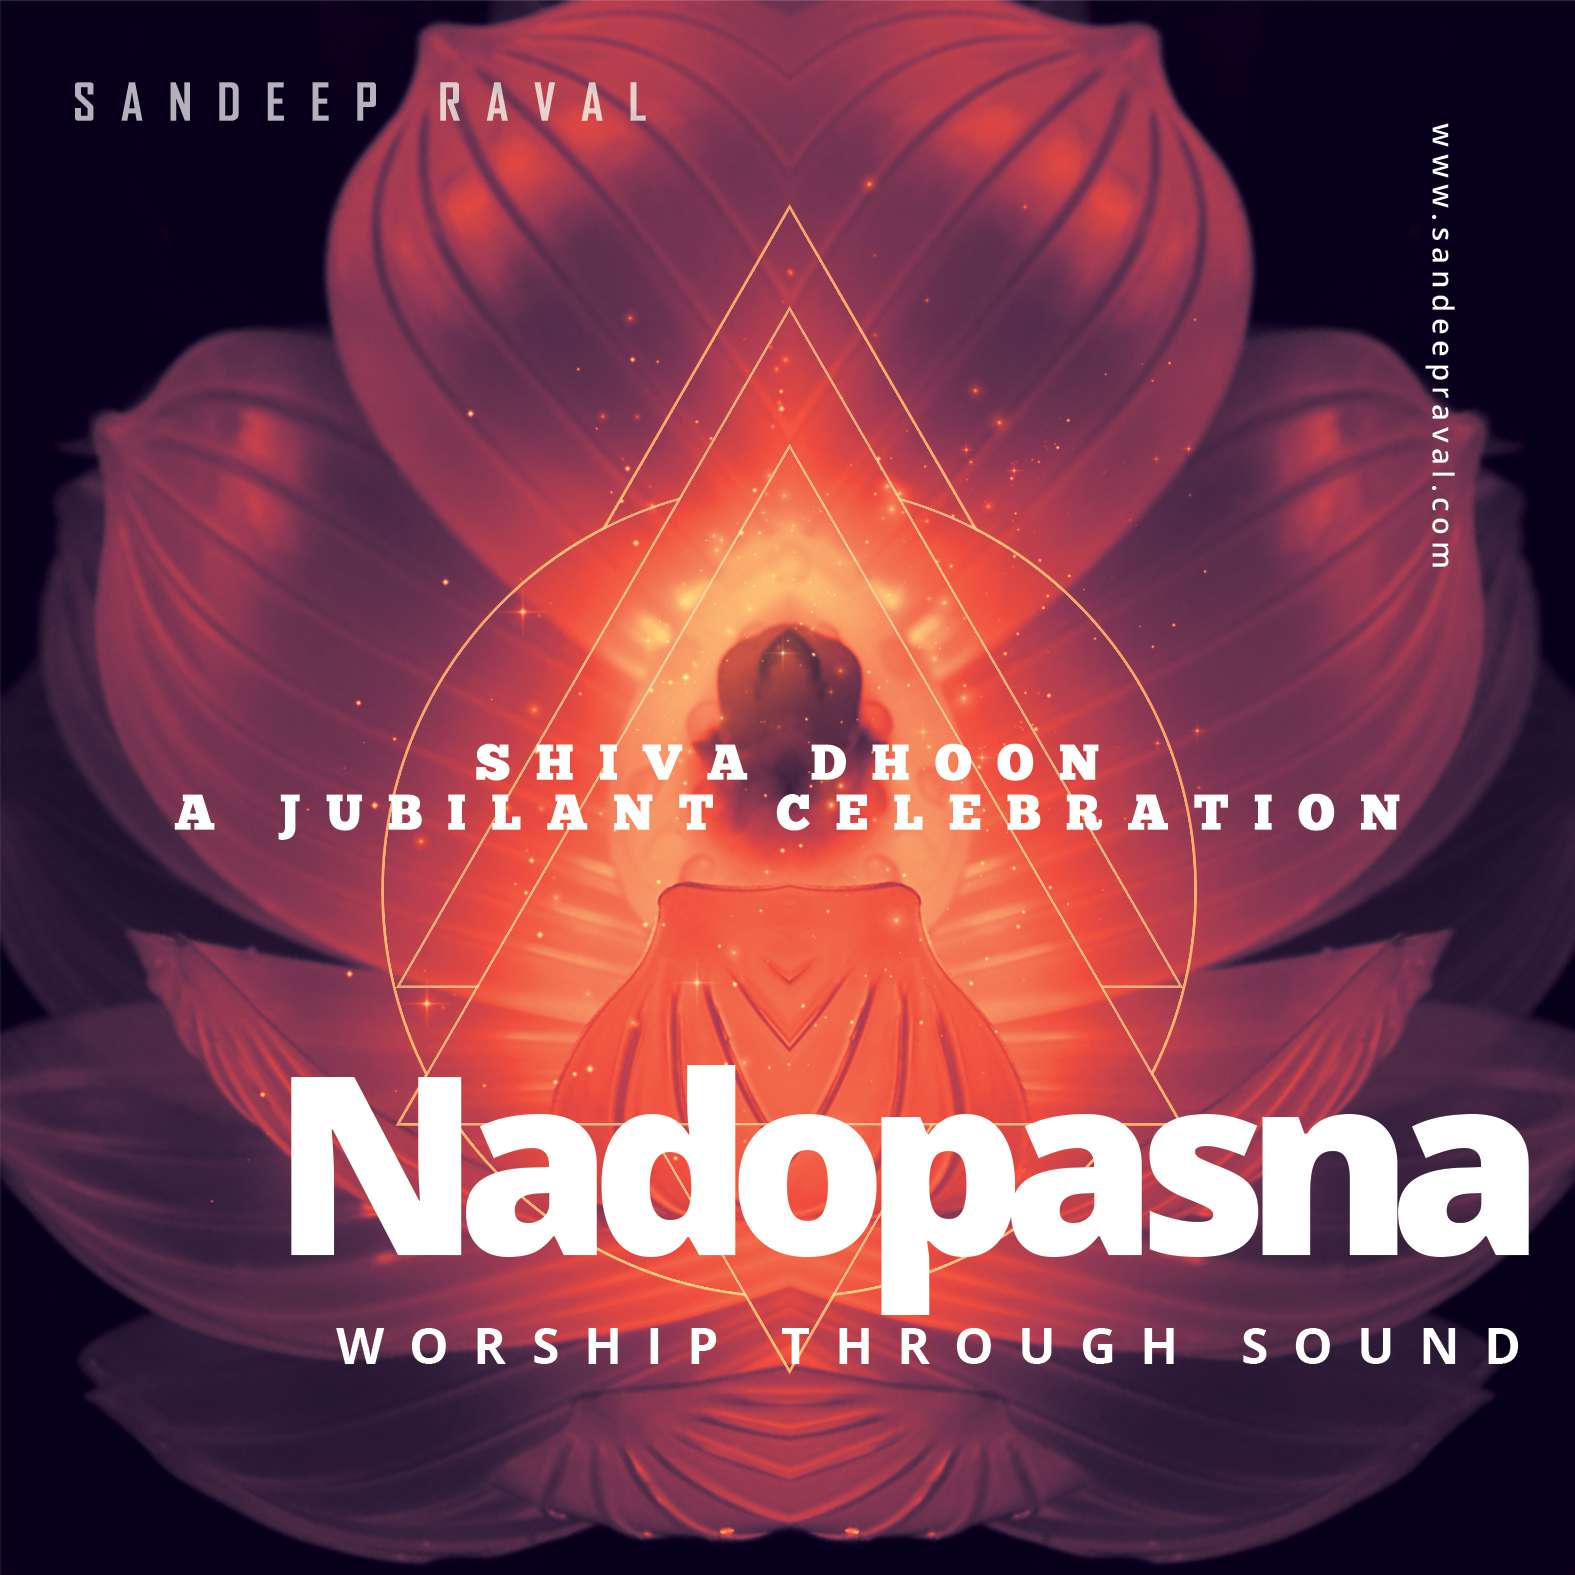 Shiva Dhoon – a Jubilant Celebration